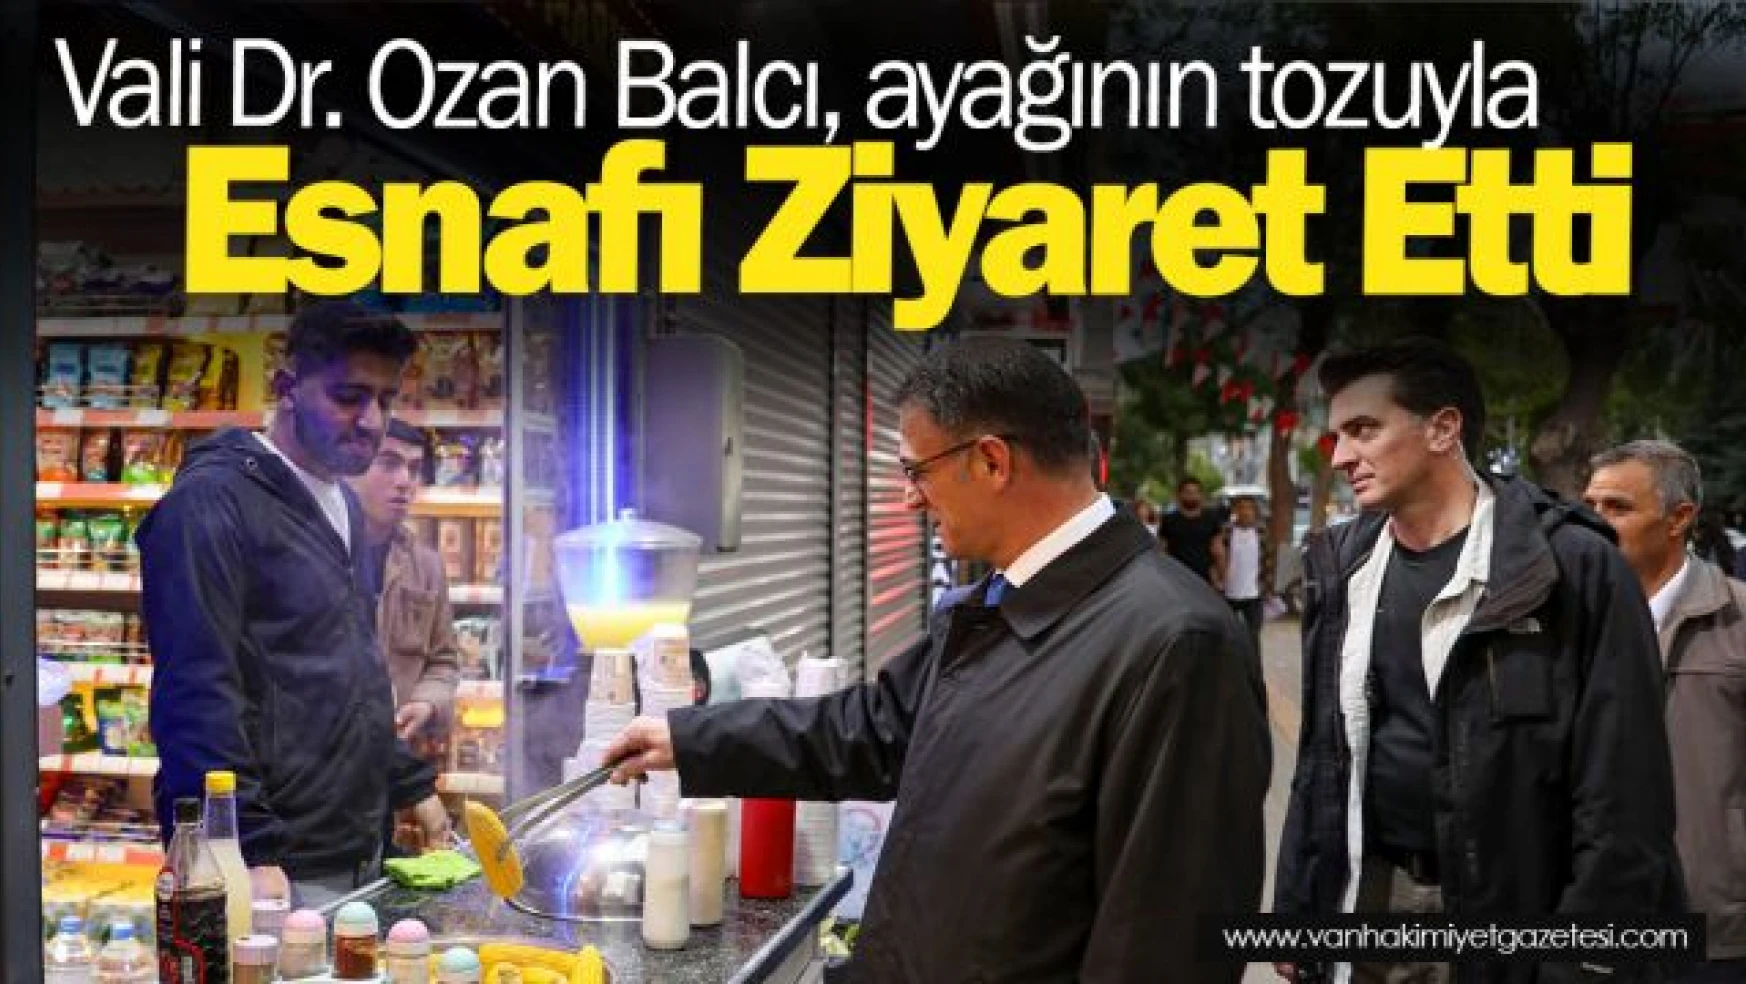 Vali Dr. Ozan Balcı Esnafı Ziyaret Etti